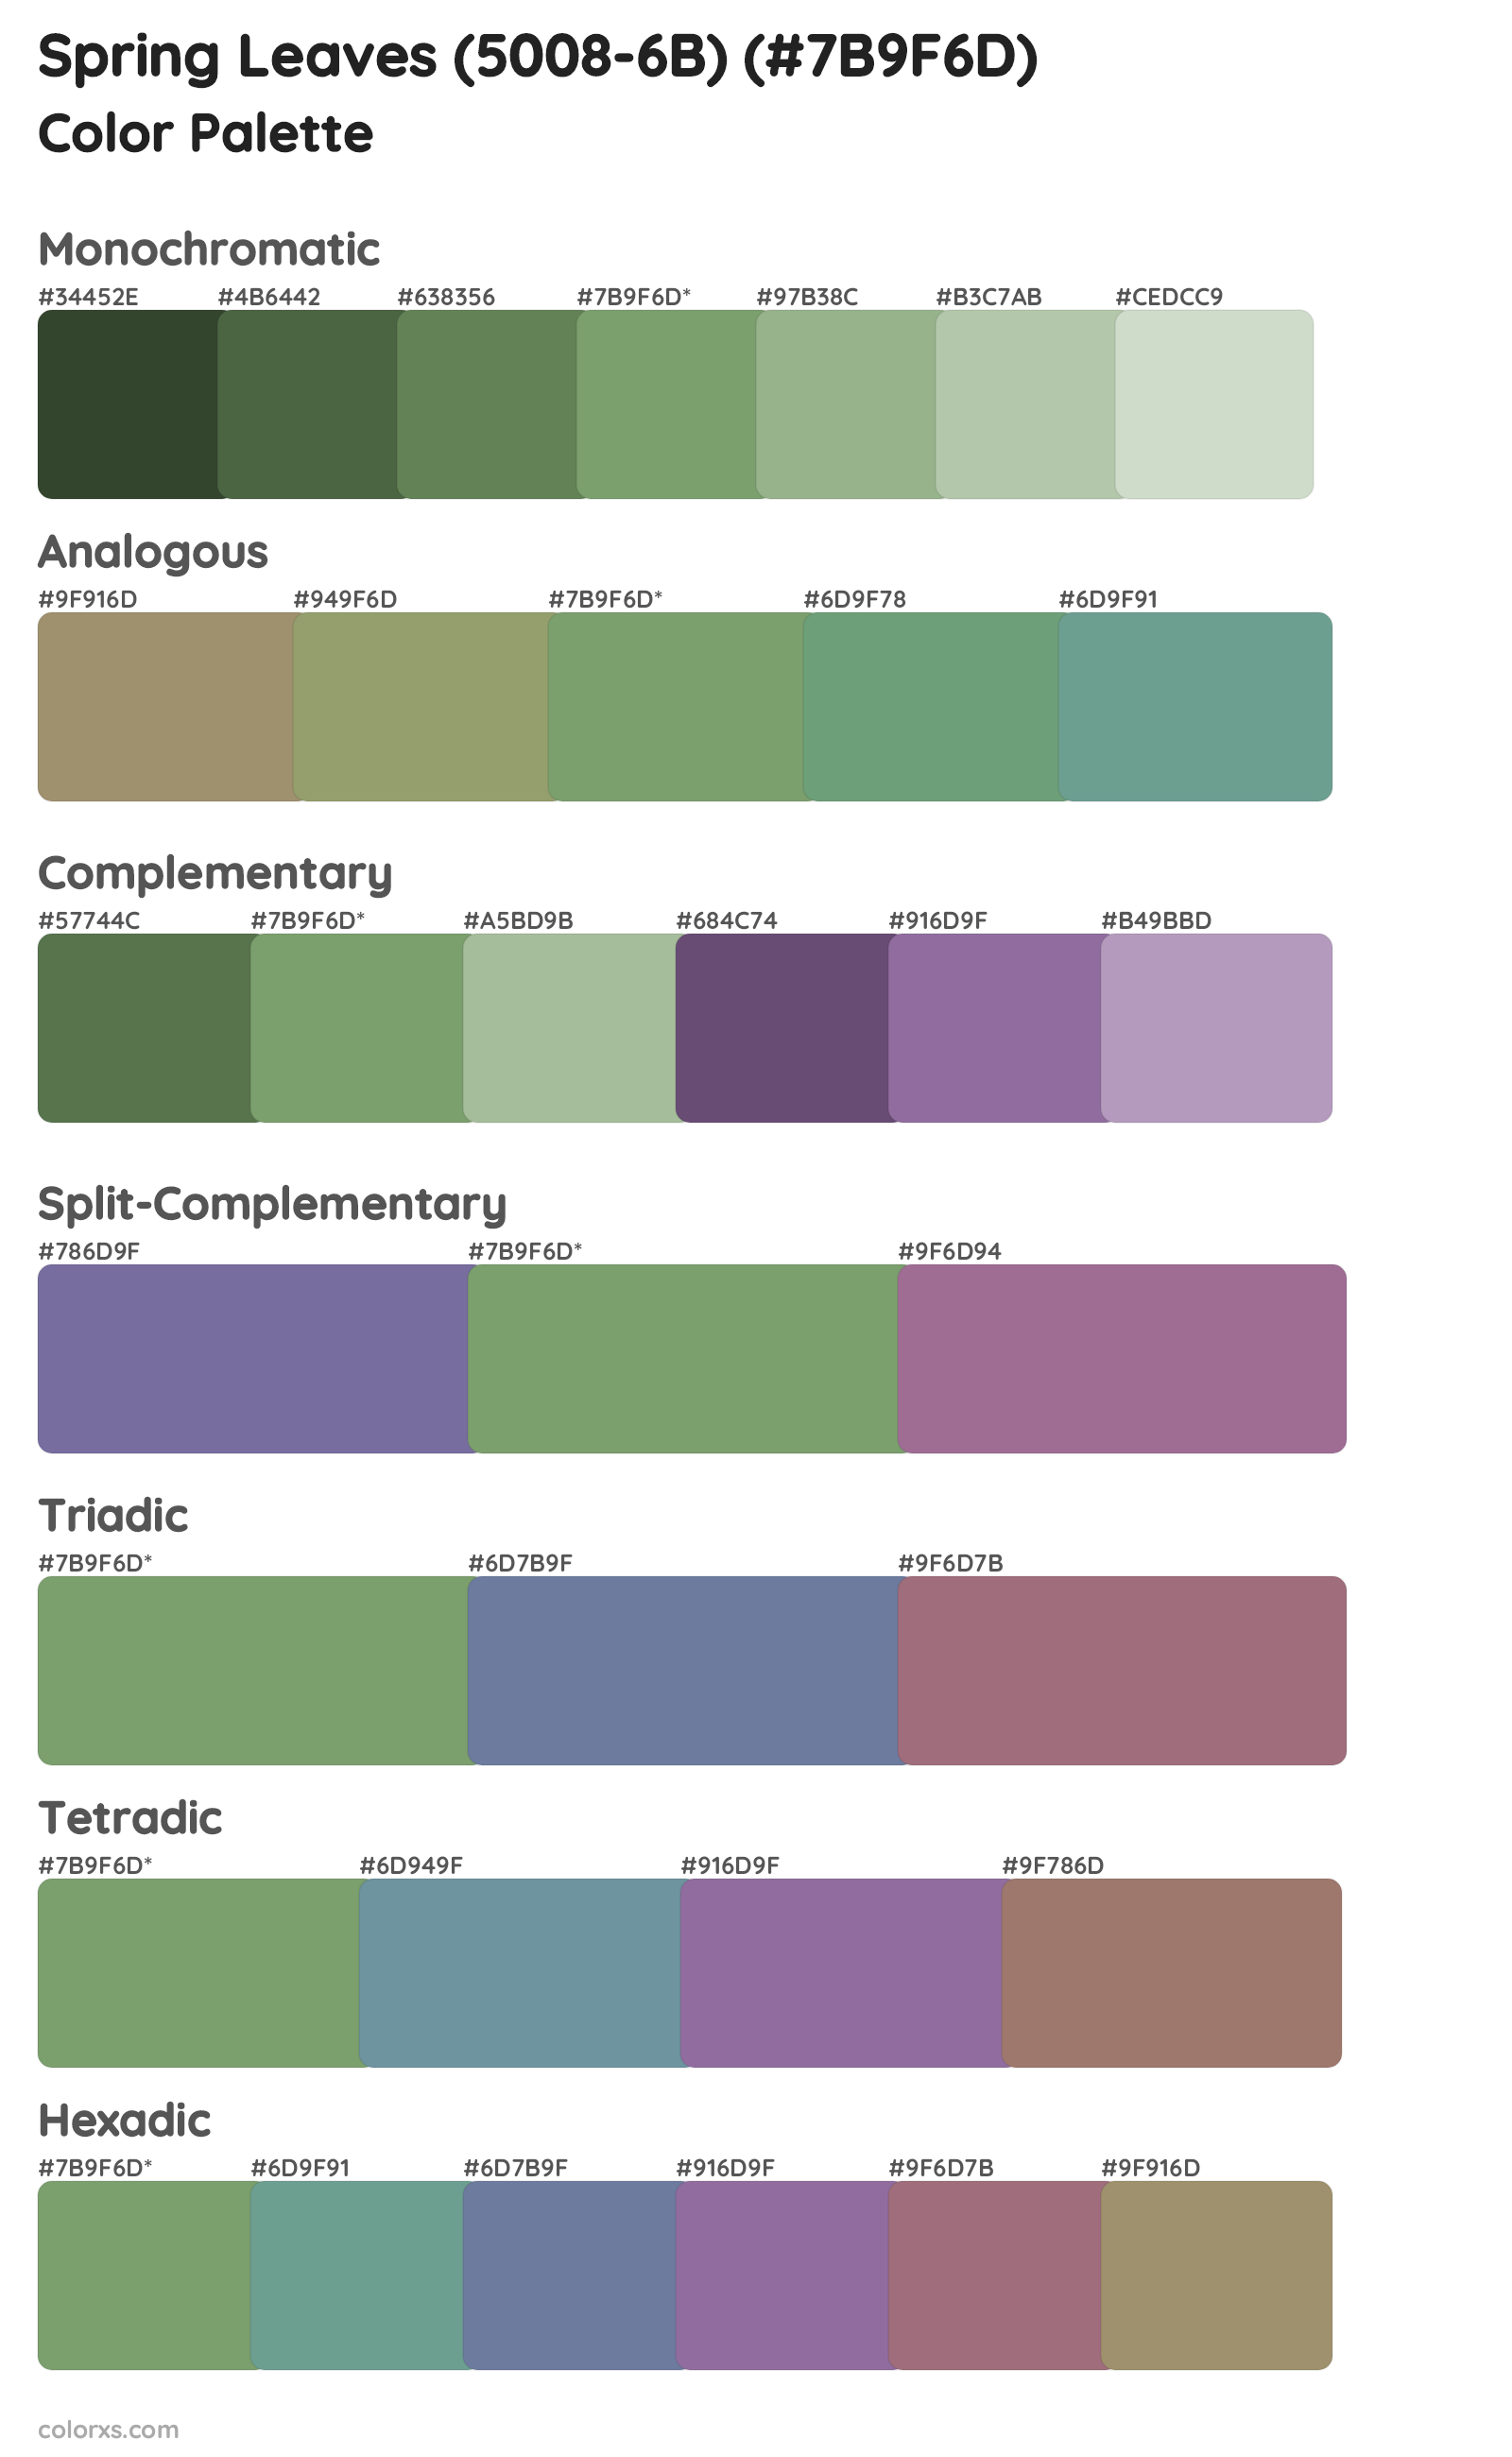 Spring Leaves (5008-6B) Color Scheme Palettes